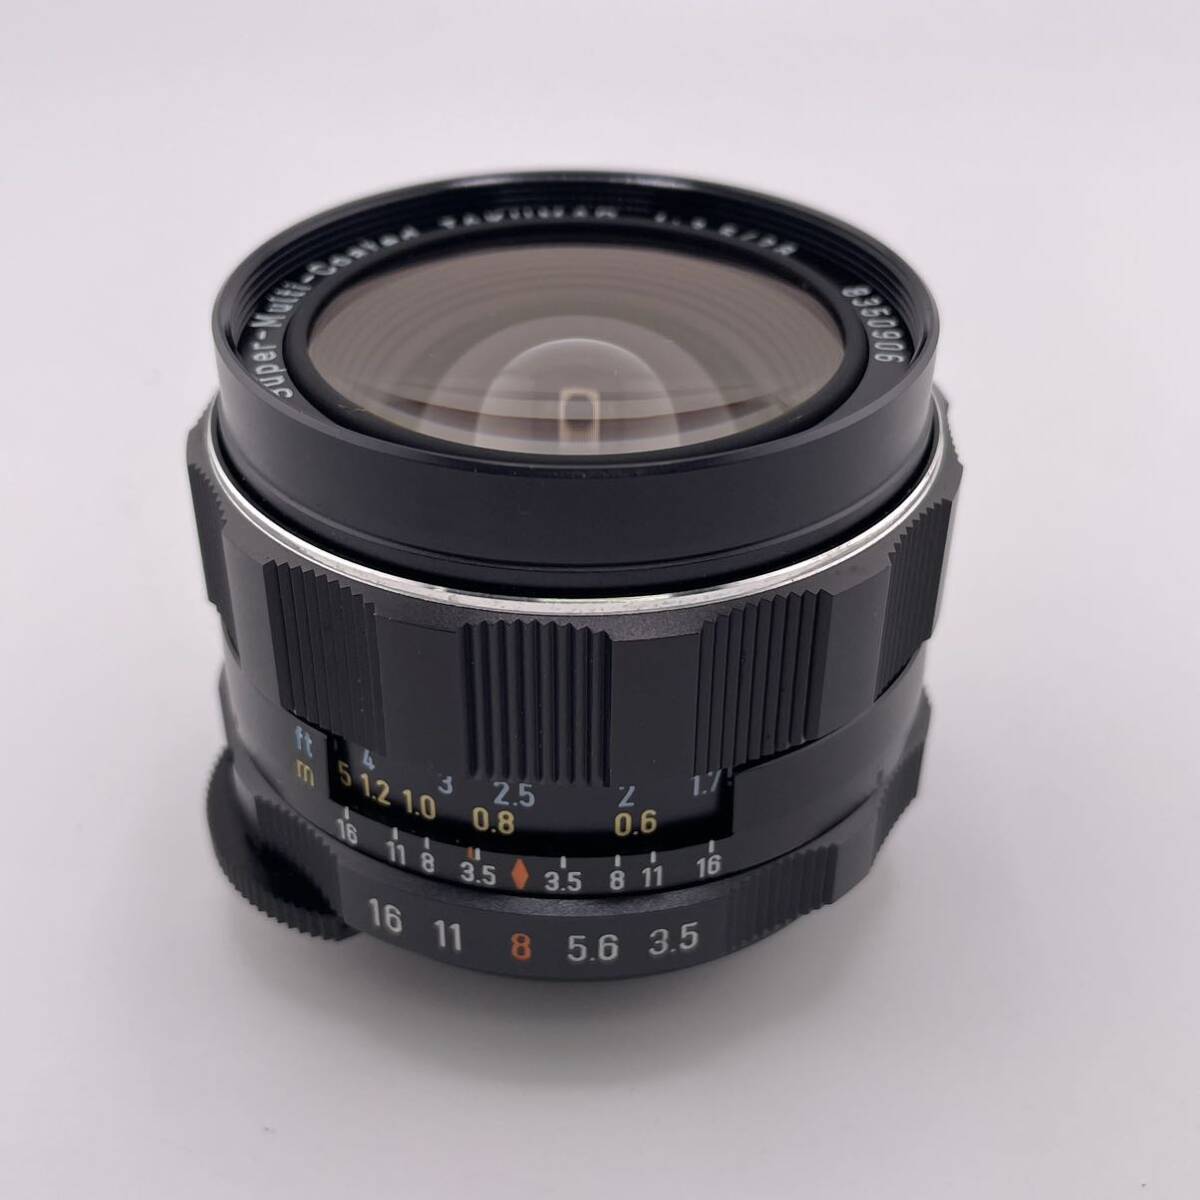 Super-Multi-Coated SMC TAKUMAR 1:3.5/28 レンズ カメラレンズ ケース付き【S30385-676】_画像2